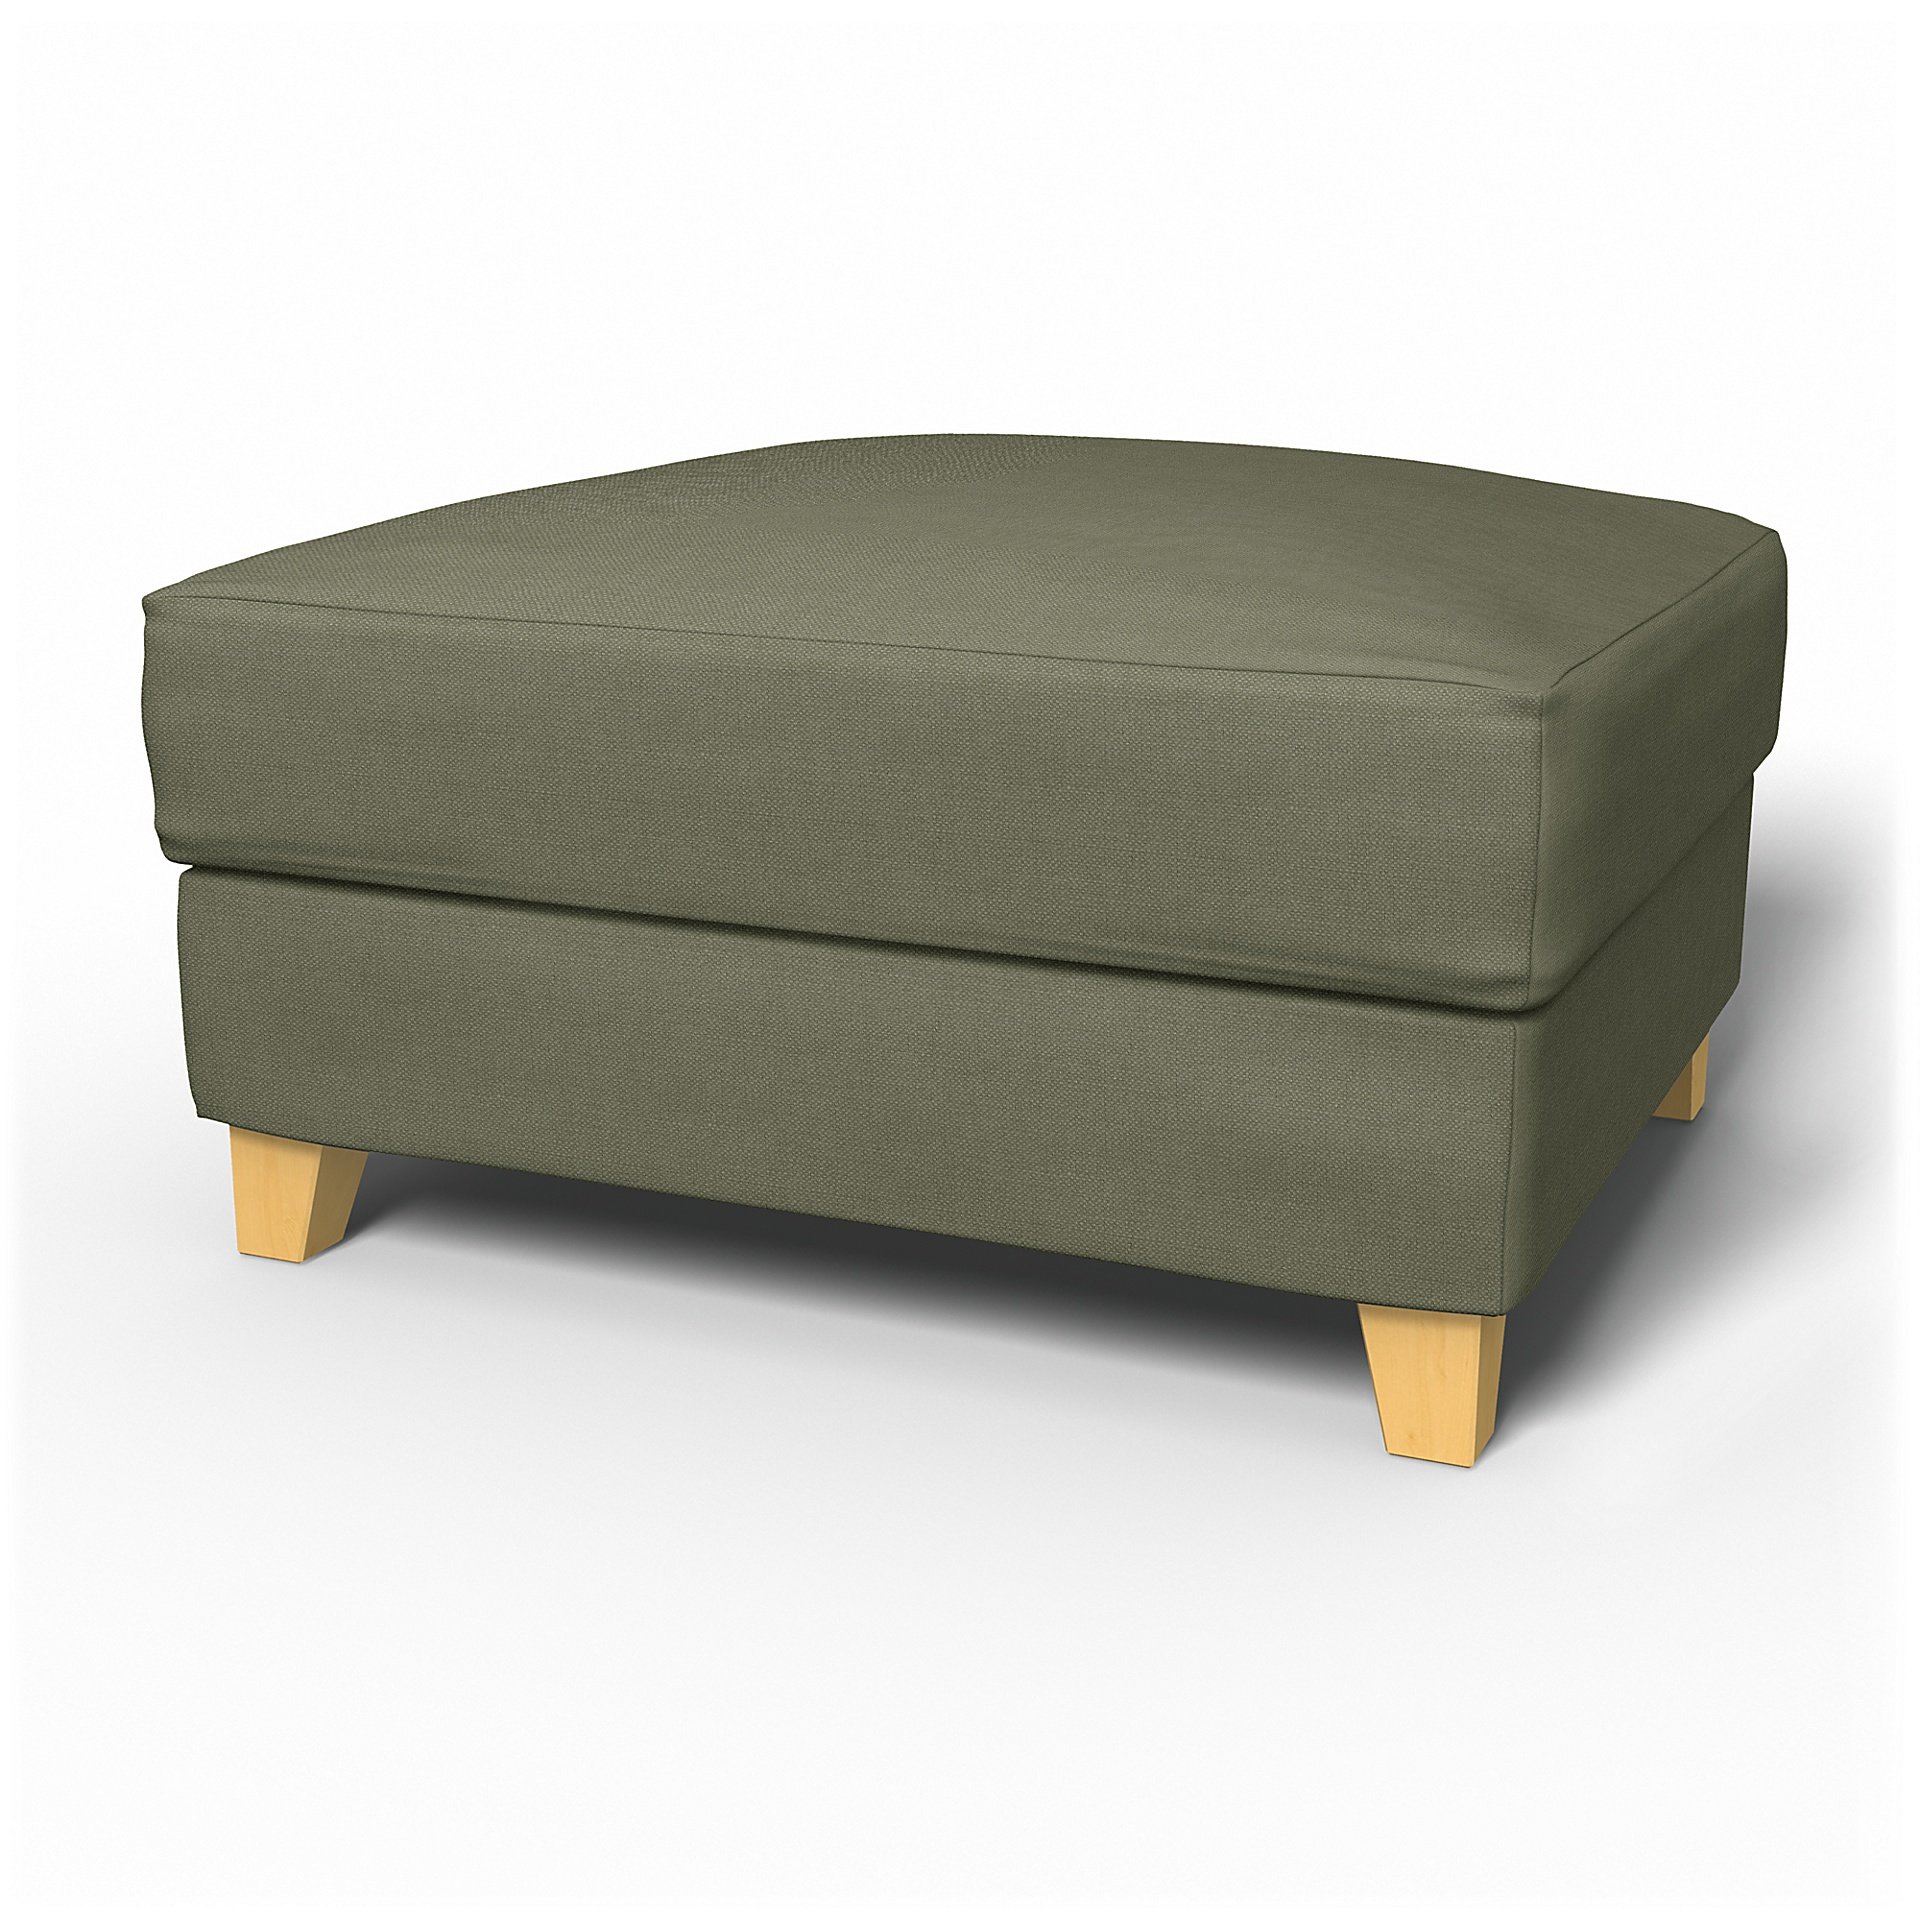 IKEA - Backa Footstool Cover, Sage, Linen - Bemz